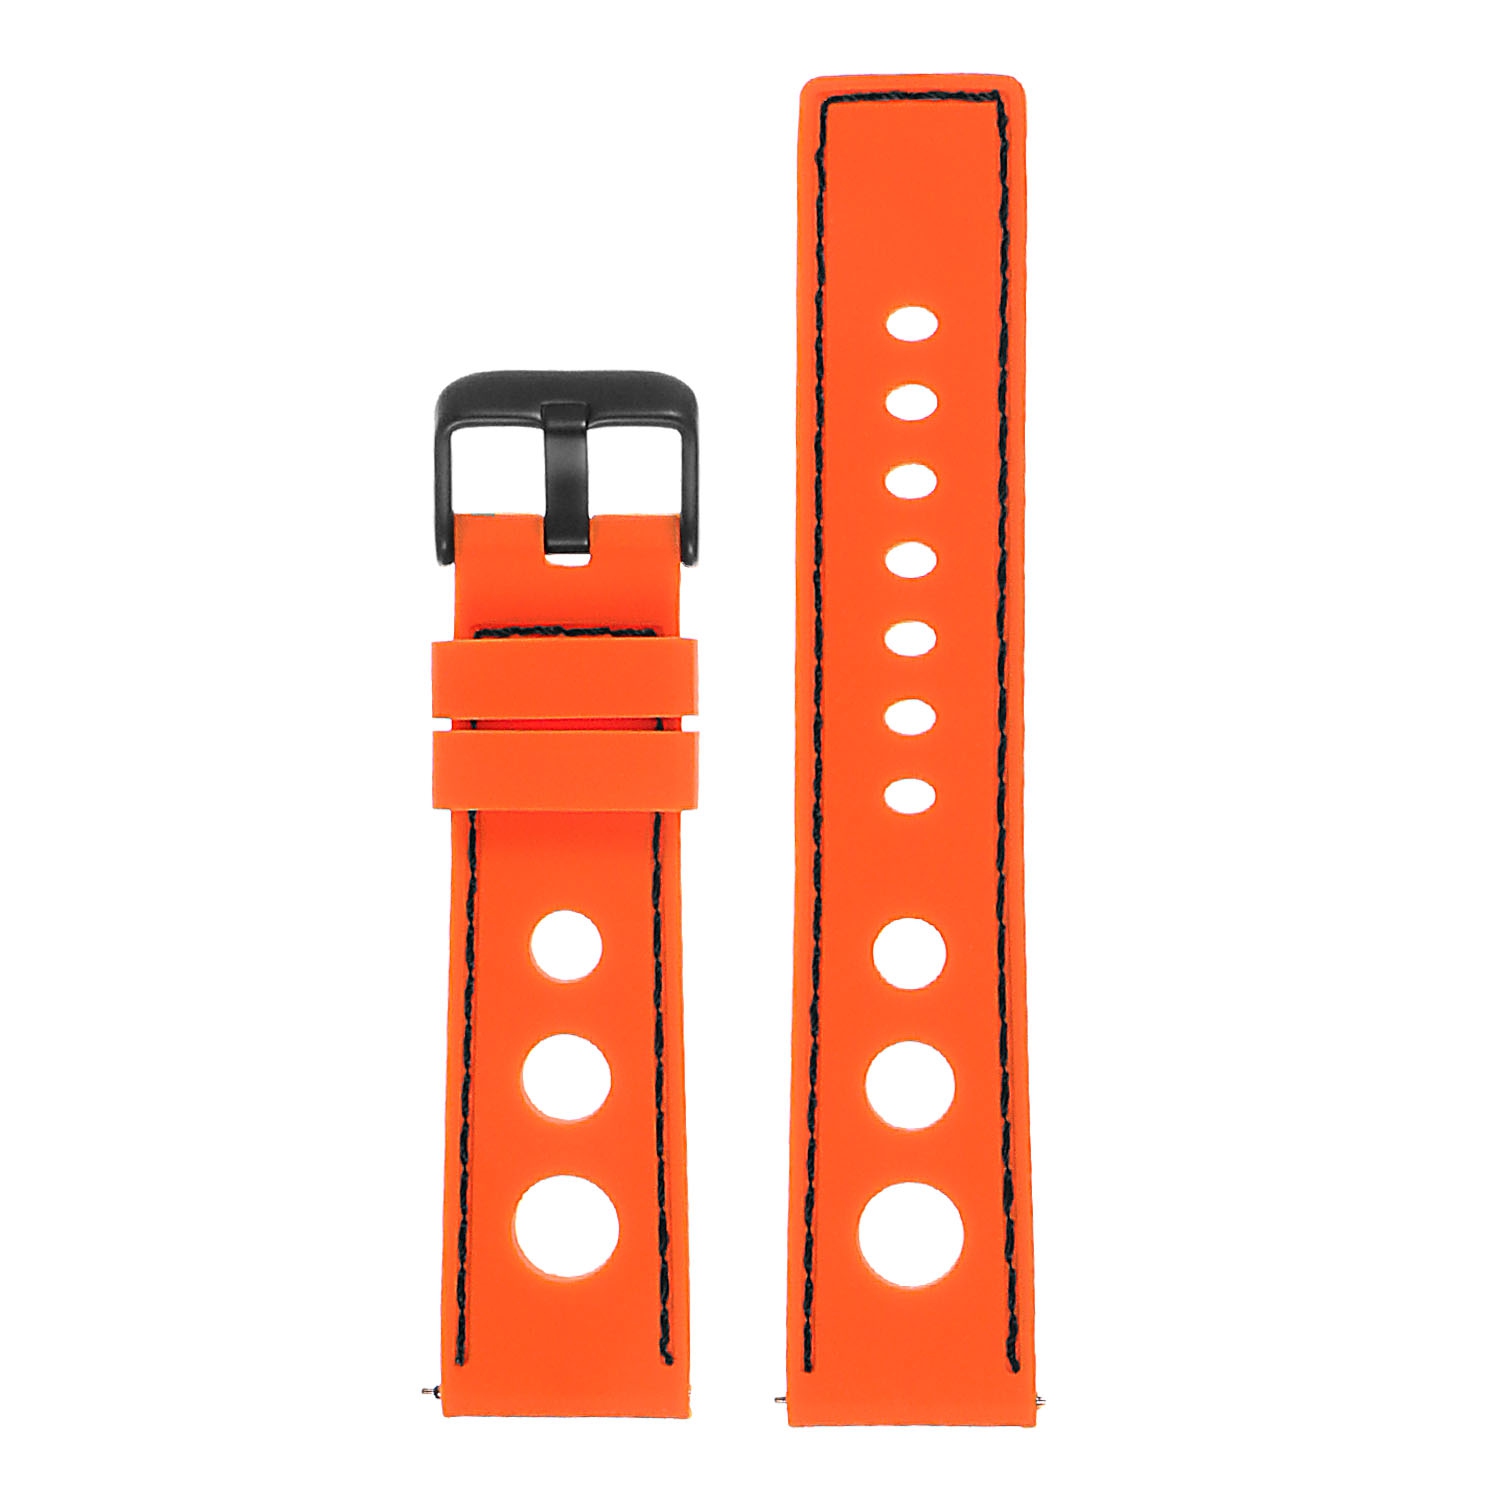 StrapsCo Silicone Rubber Rally 22mm Watch Band Strap for LG G Watch W100 - Orange & Black (Black Buckle)